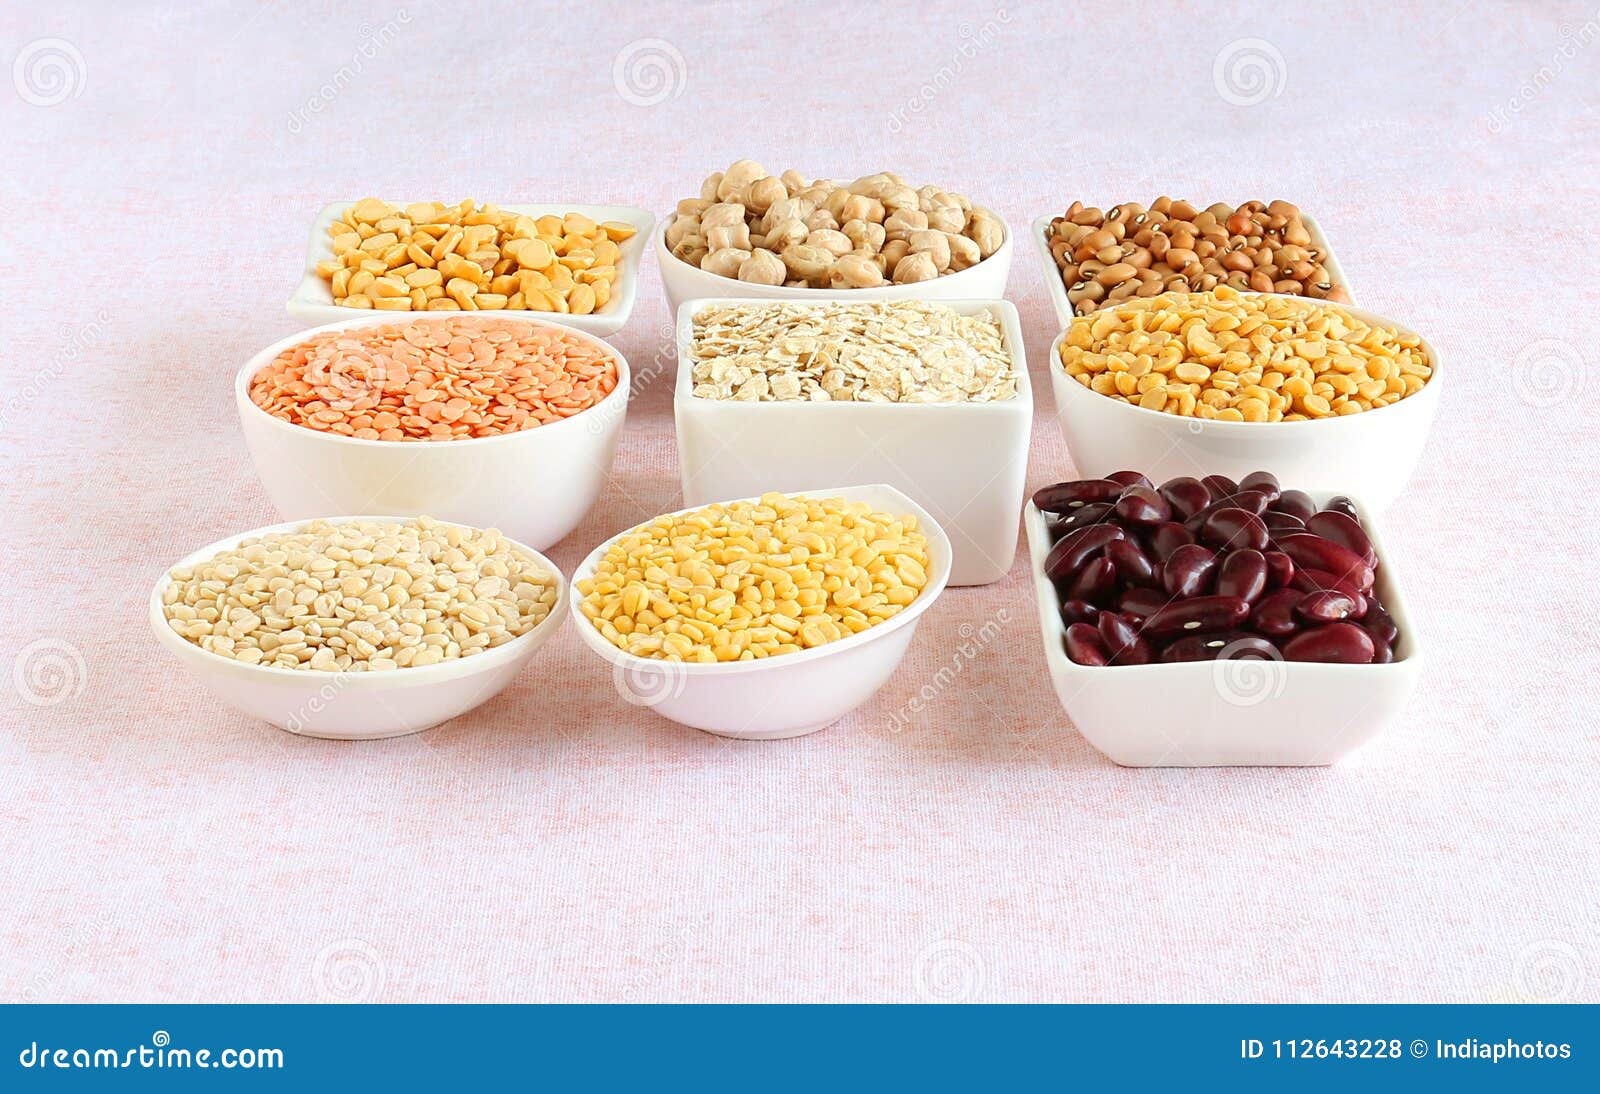 cholesterol-lowering food like oats in bowls